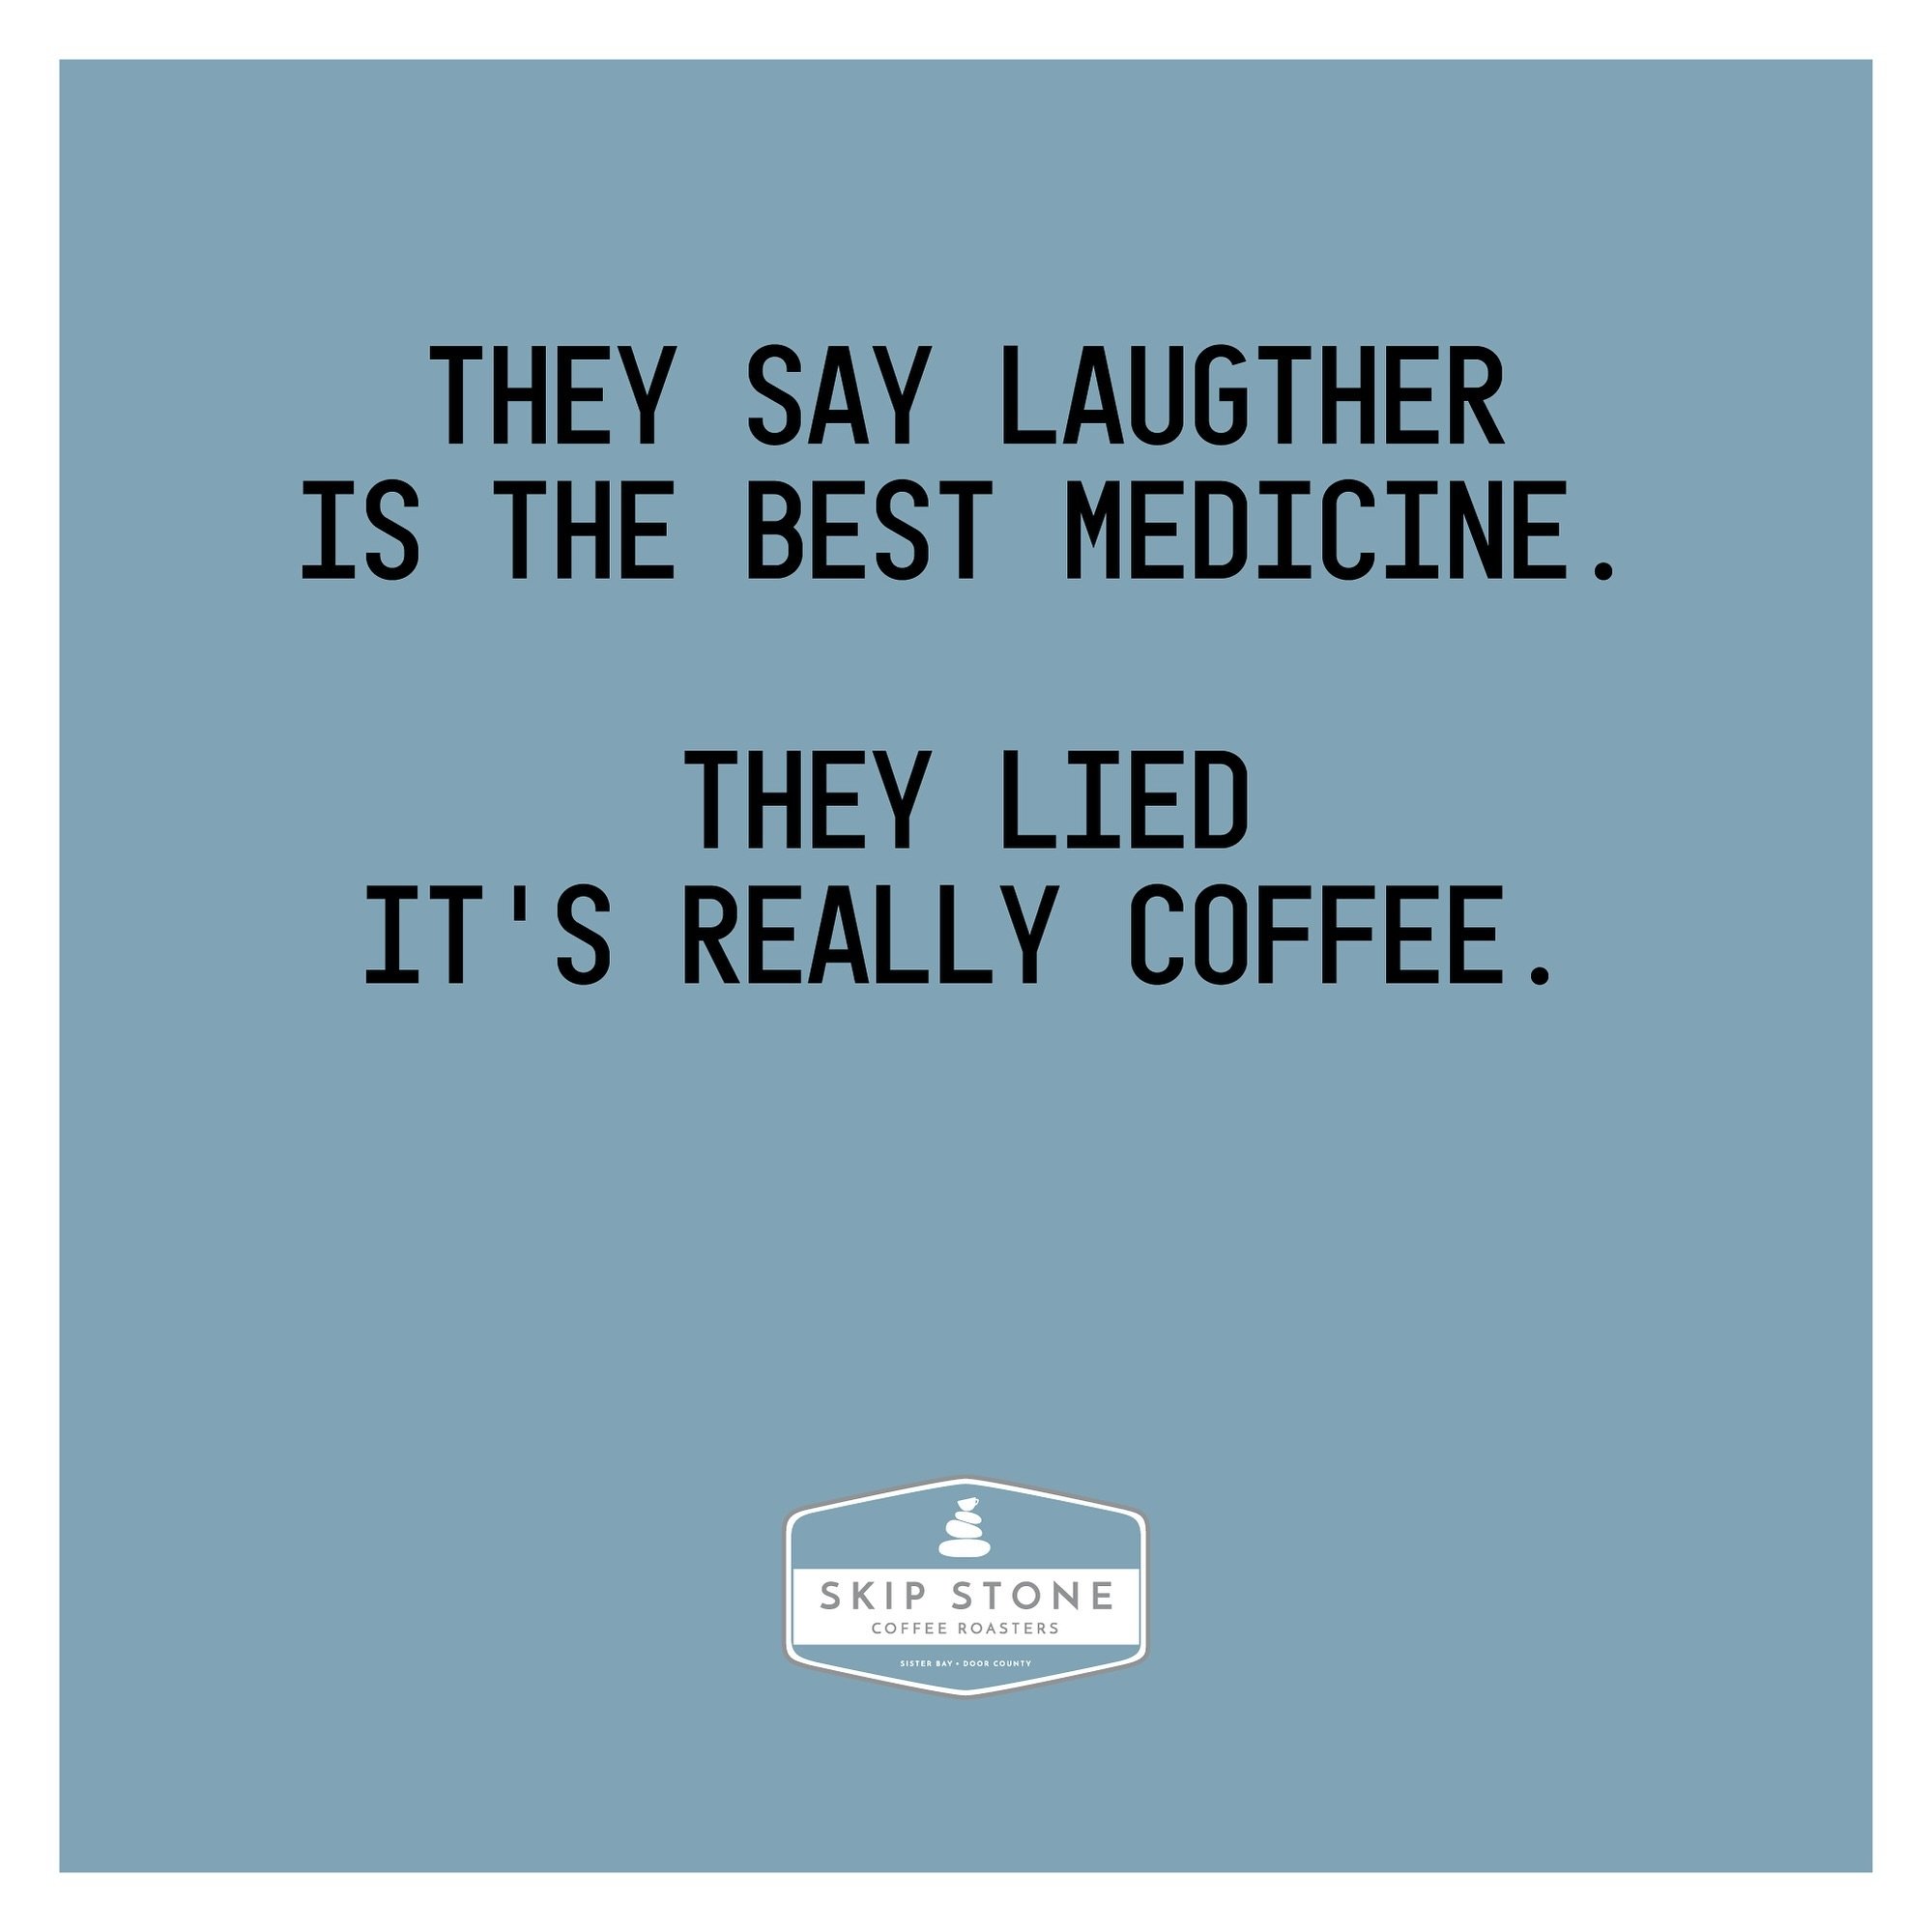 The best medicine. ☕️✨
-
#coffeequotes #coffeequote #quotes